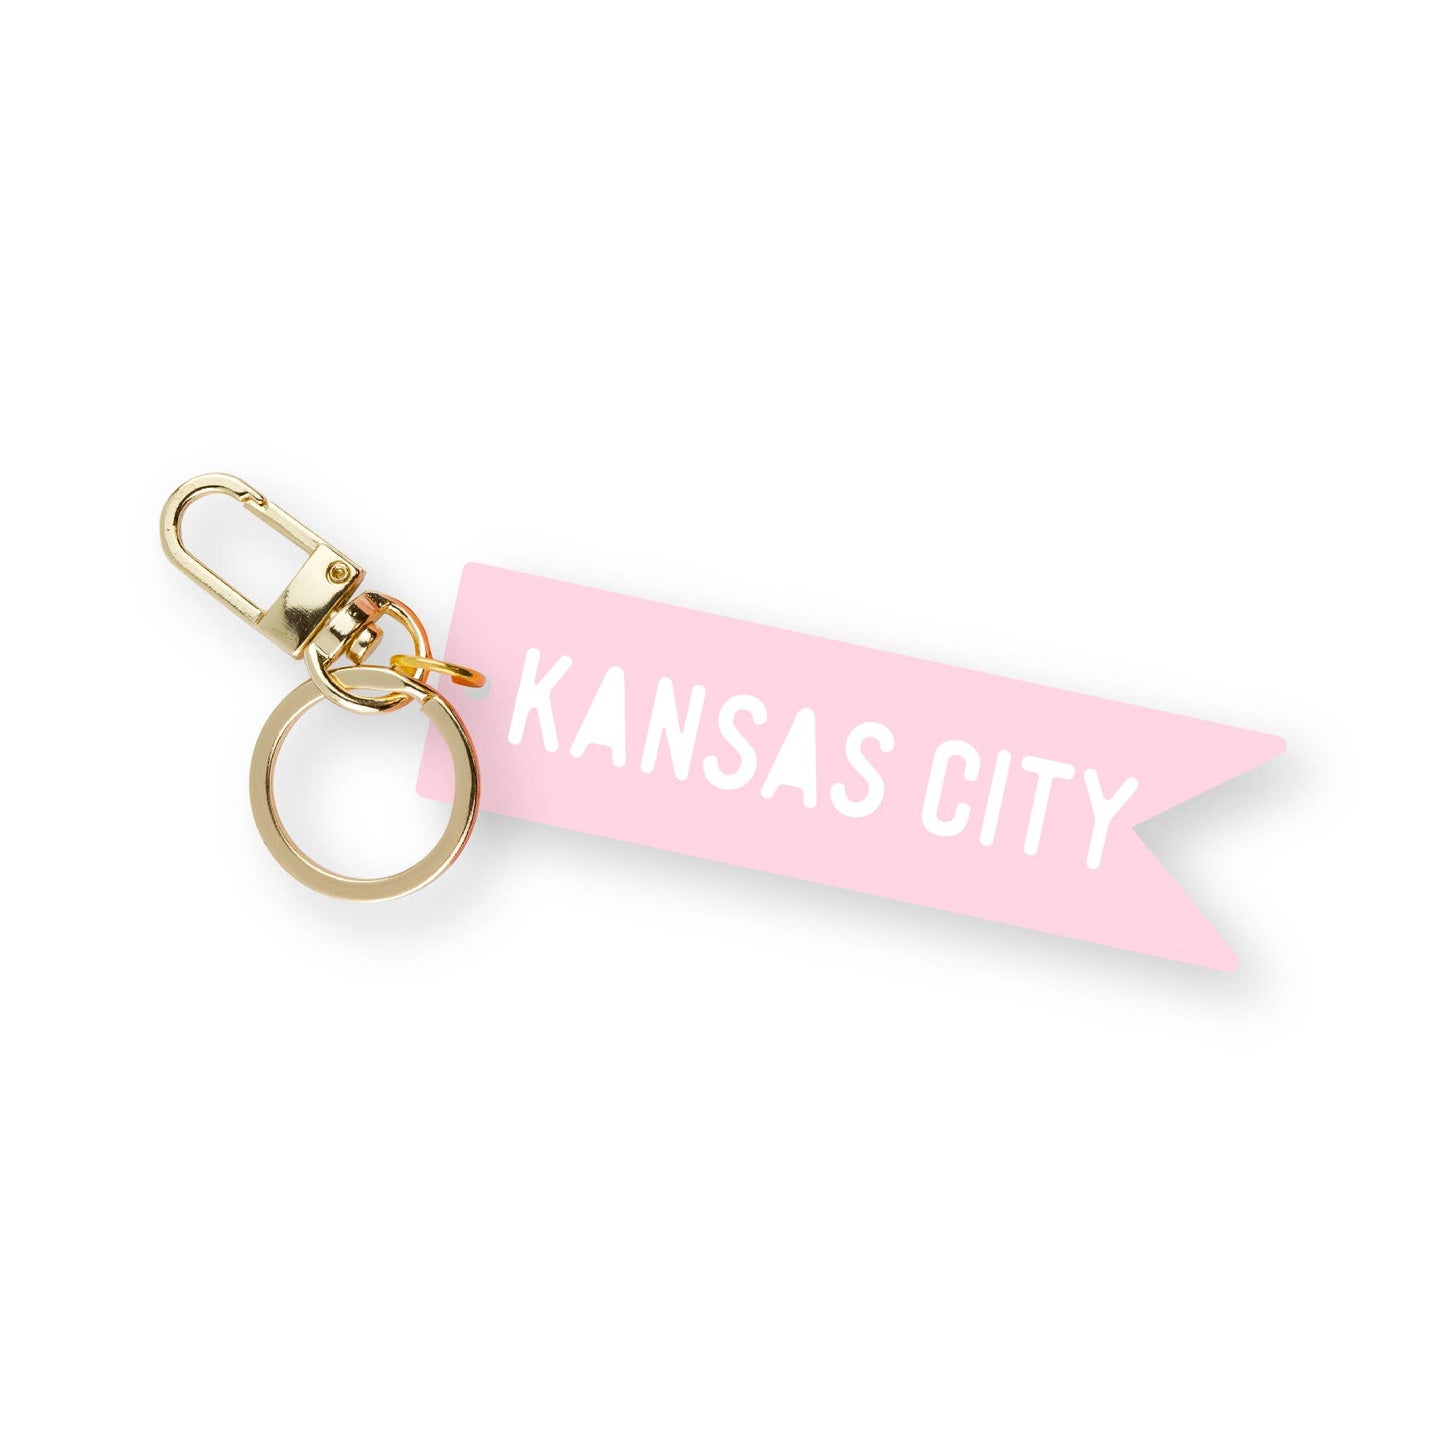 Kansas City Banner Key Chain